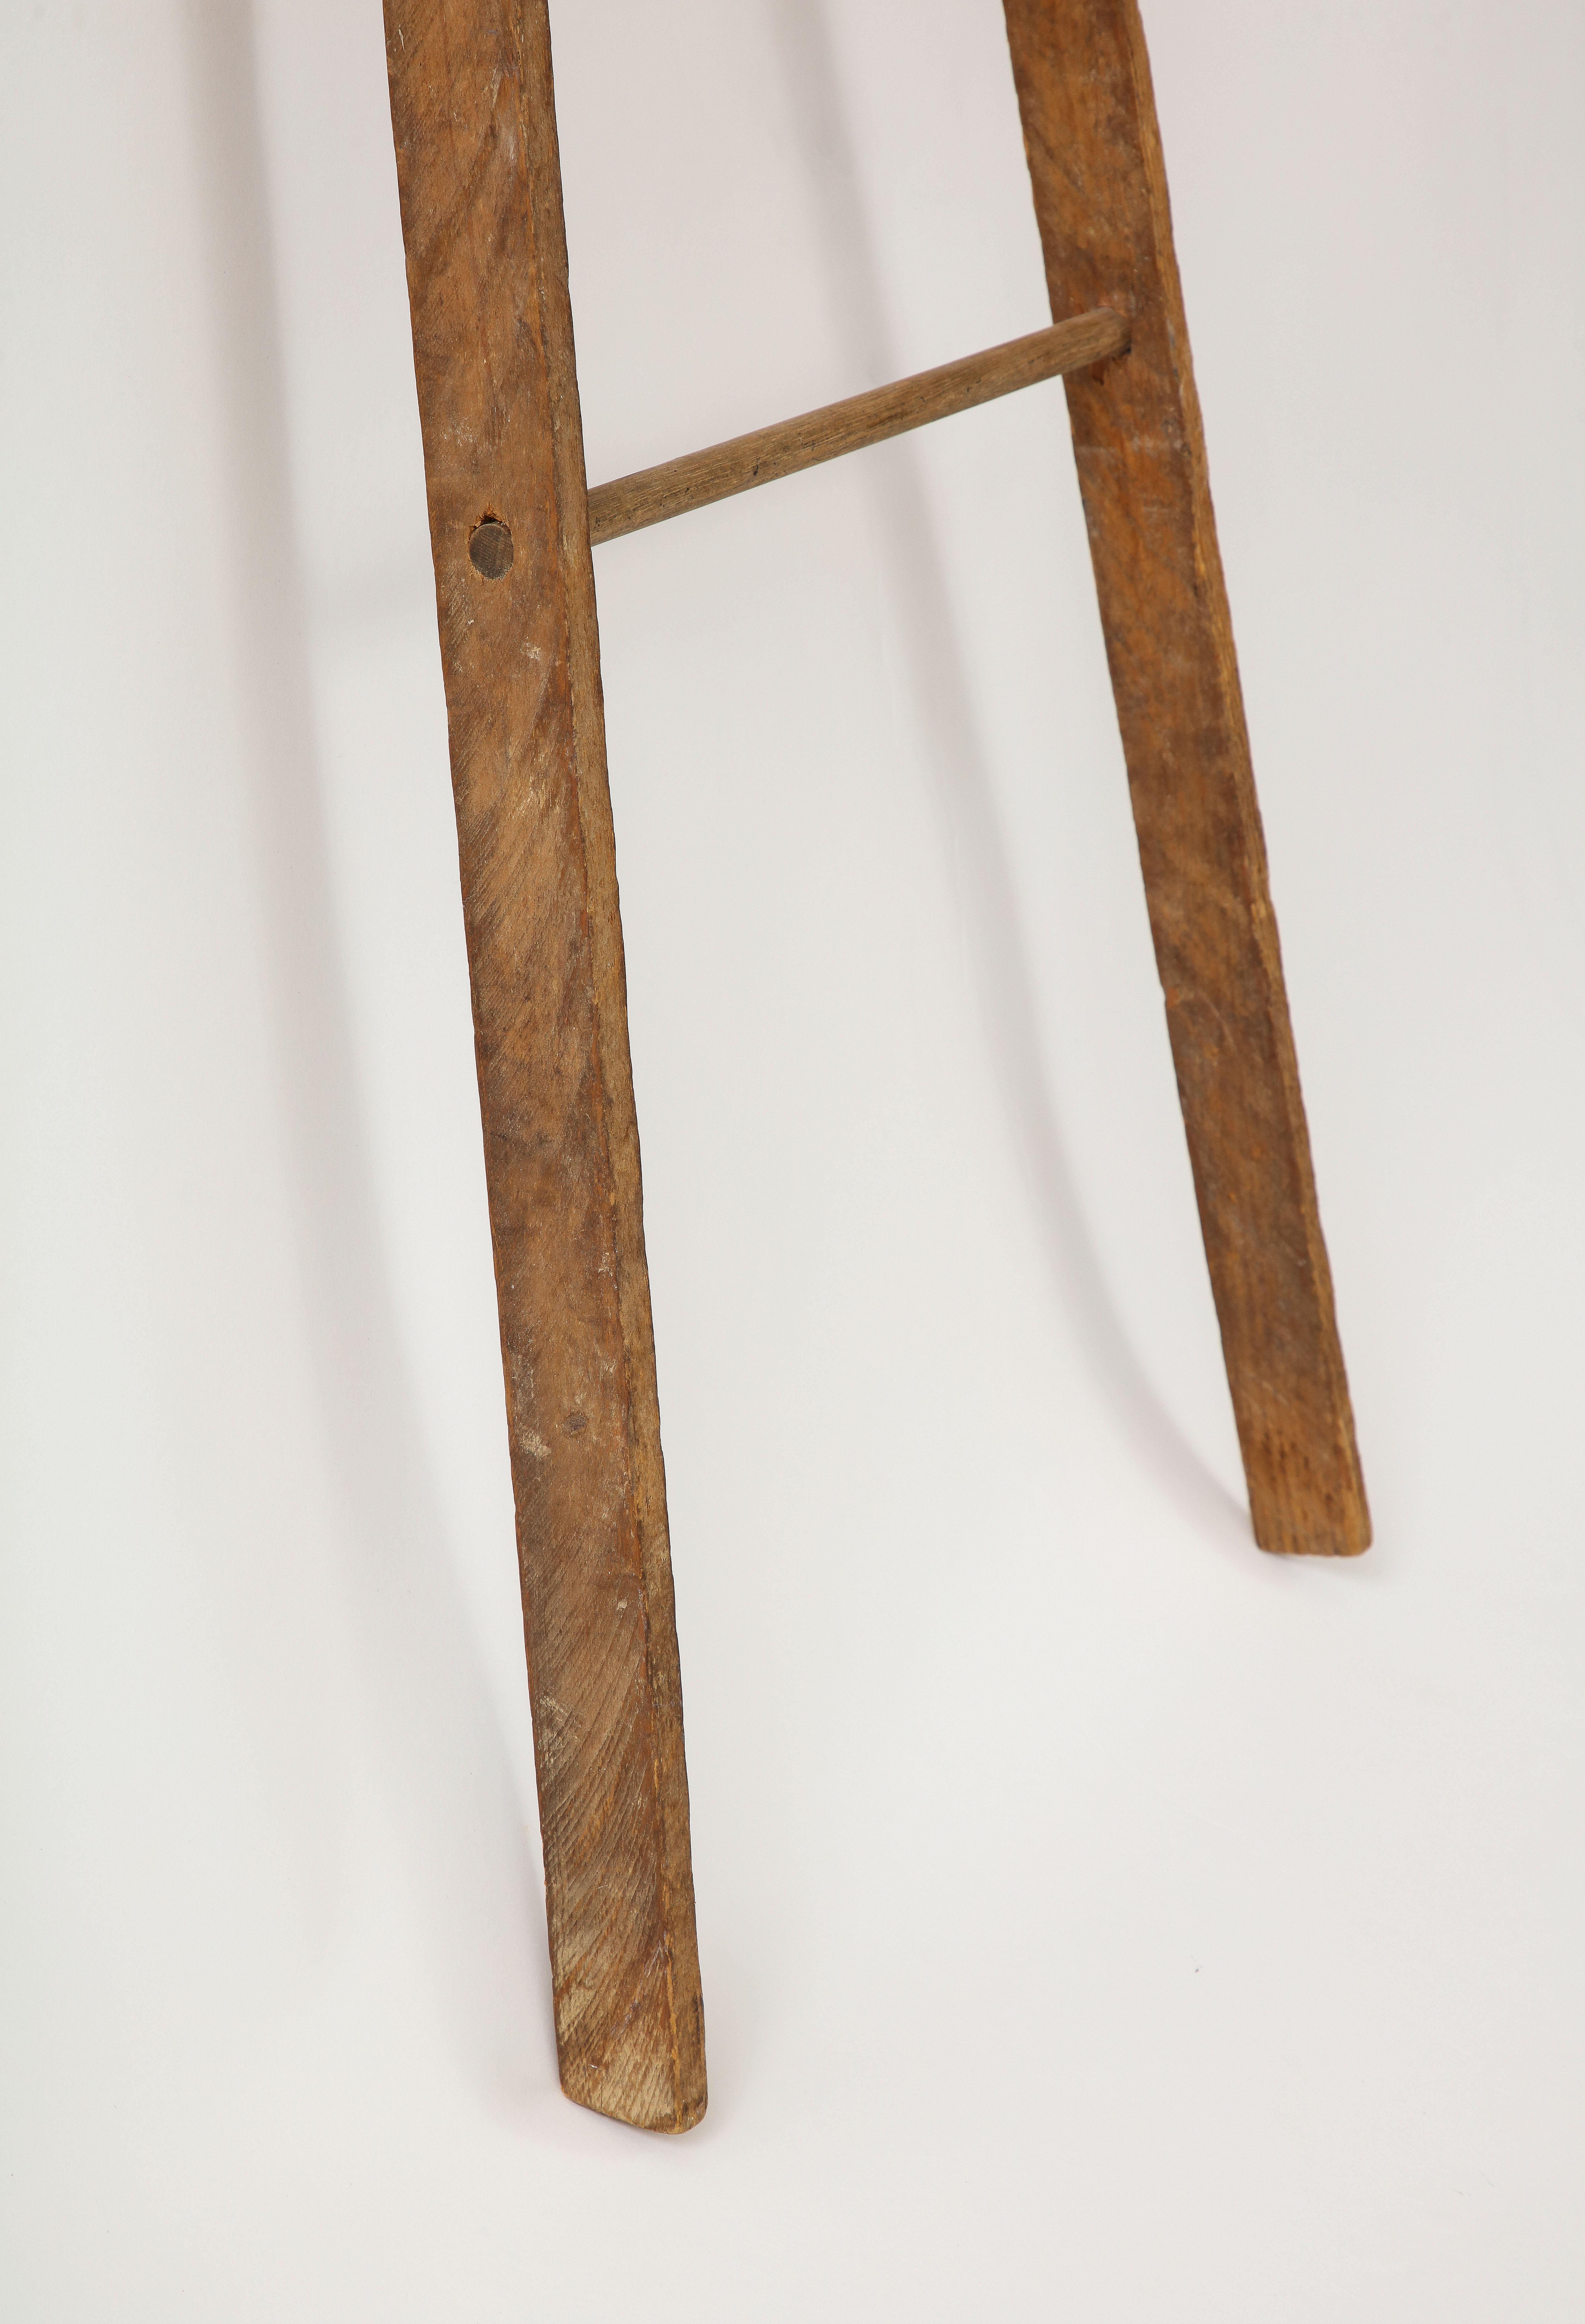 American 19th C. Ladder Model
Wood
​
H:  W: D: 1.25  in.